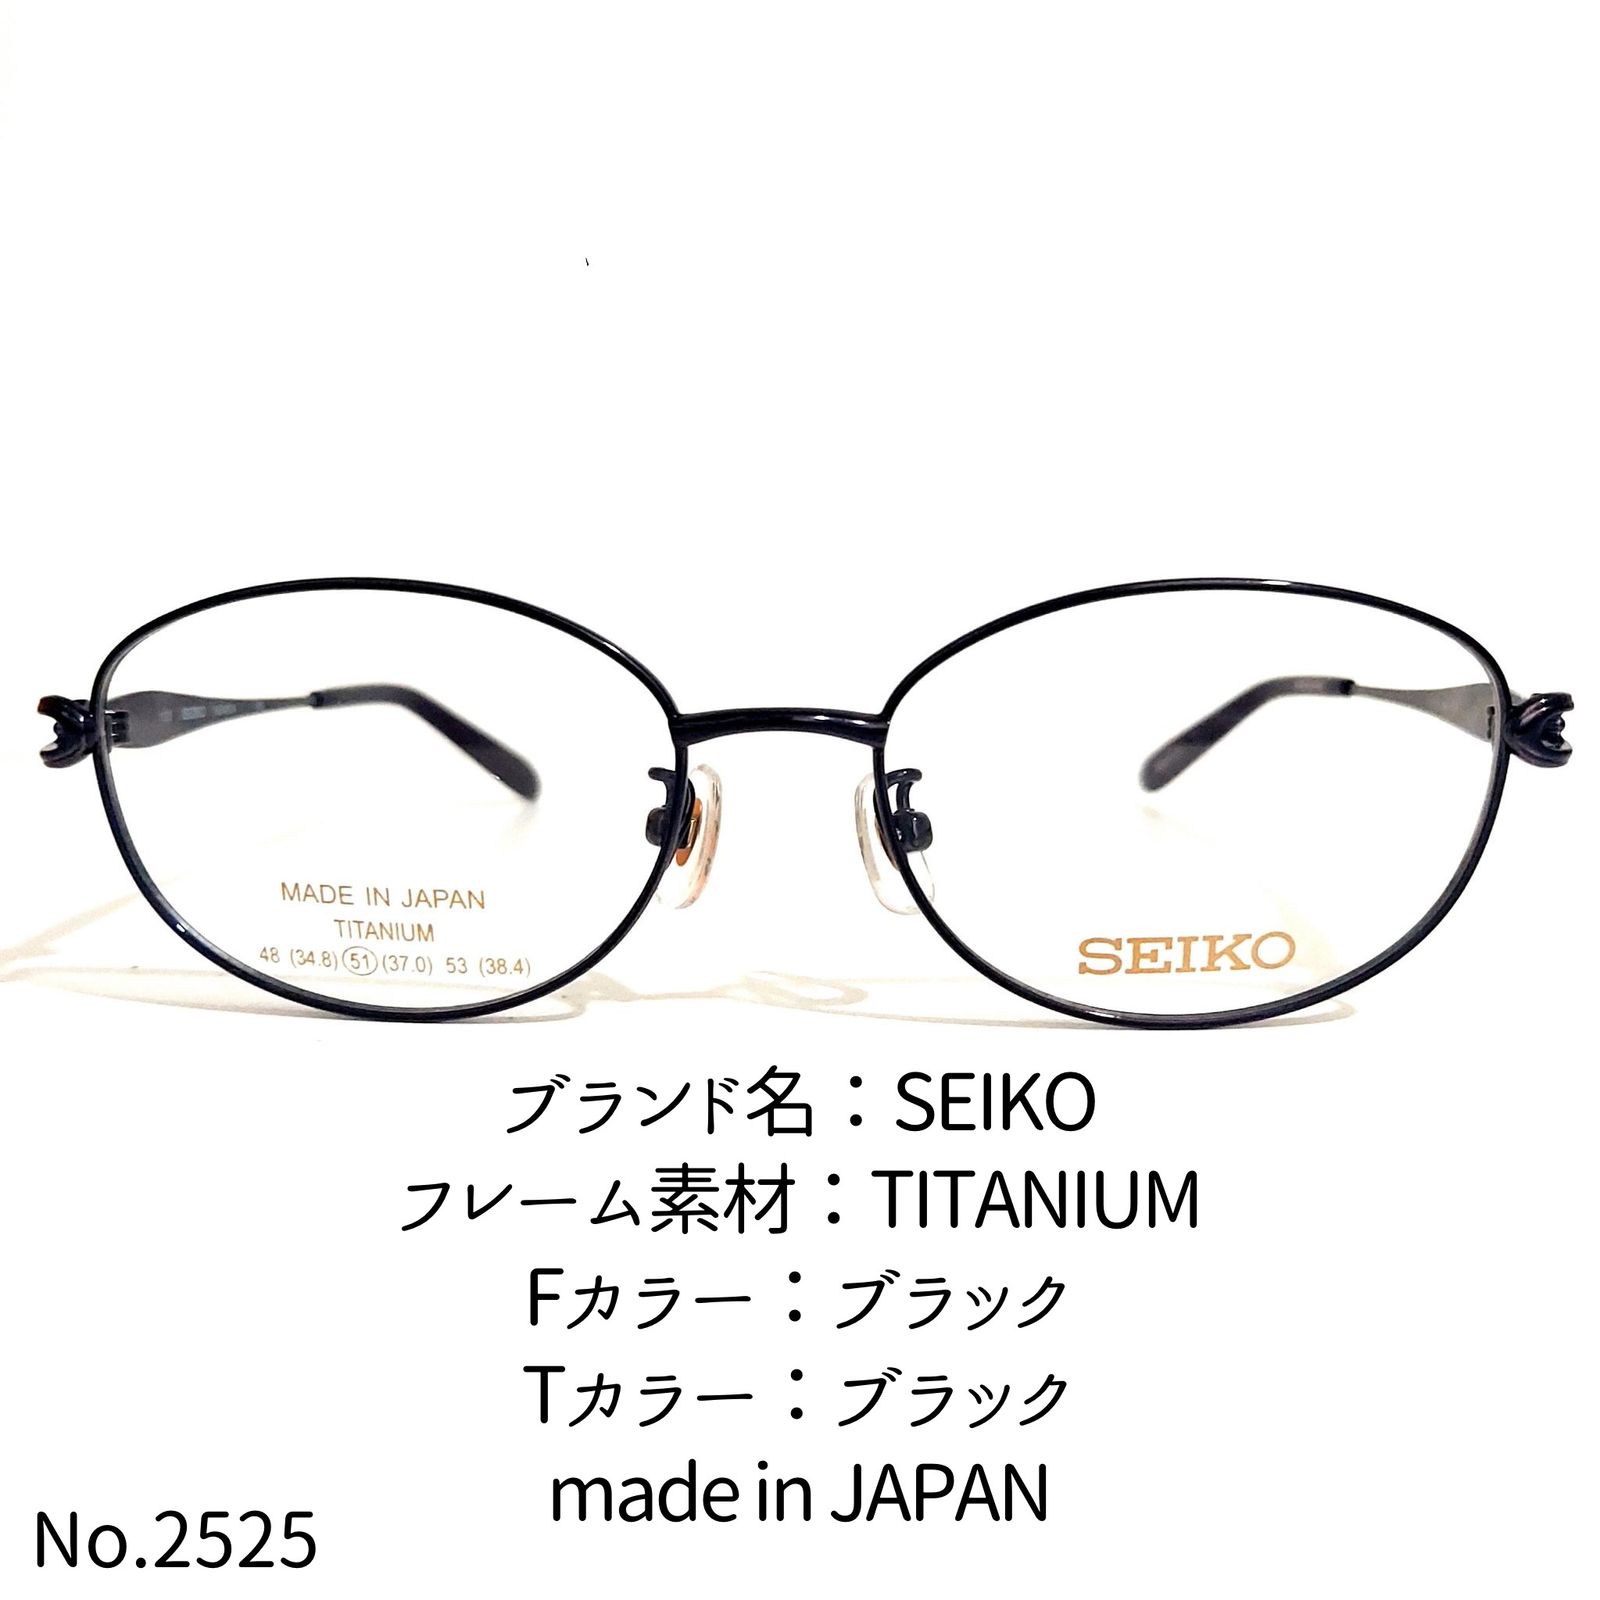 No.2525-メガネ SEIKO【フレームのみ価格】 - メルカリ